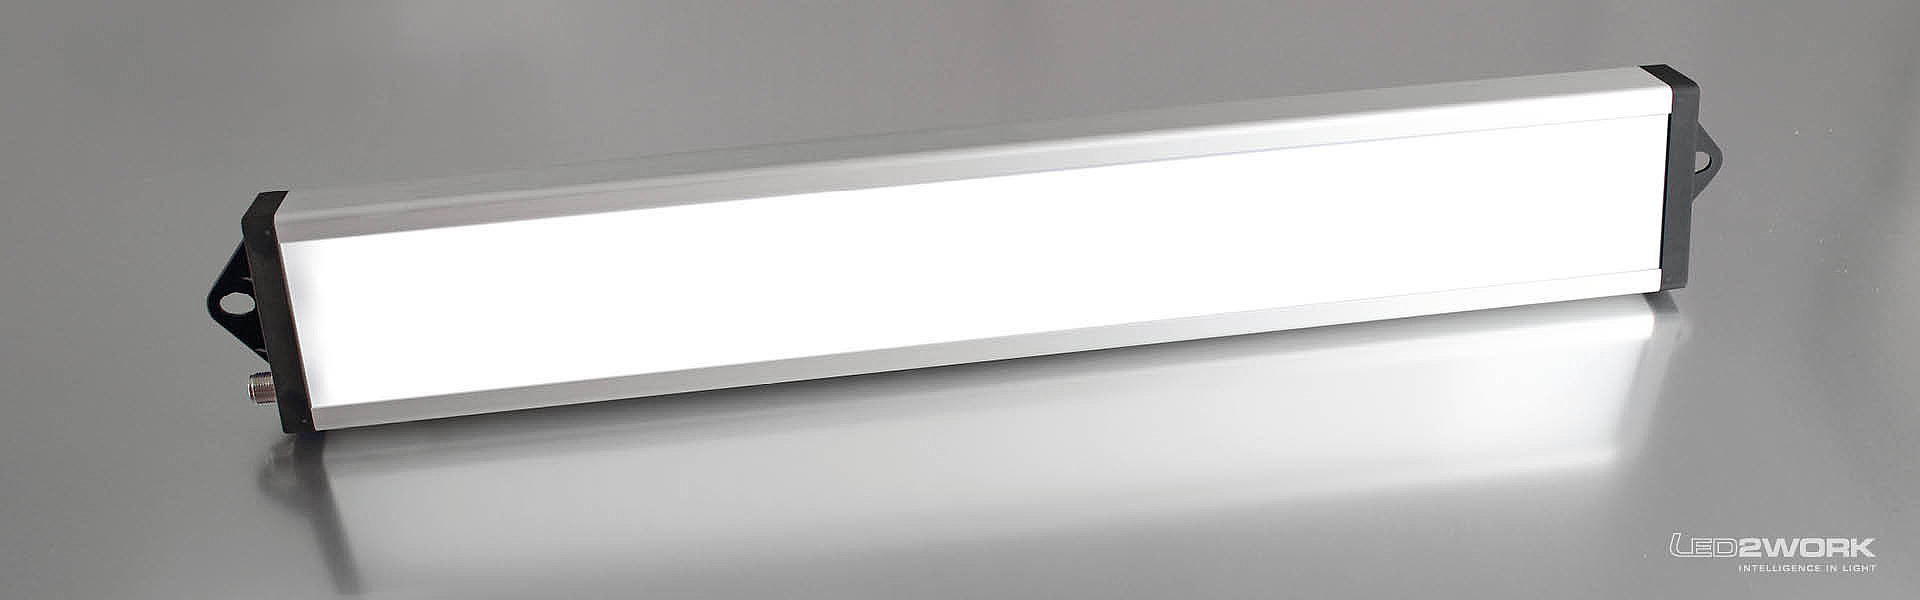 Abbildung der LED Arbeitsplatzleuchte | LED Systemleuchte  | LED Signalleuchte UNILED SL RGB-W von LED2WORK